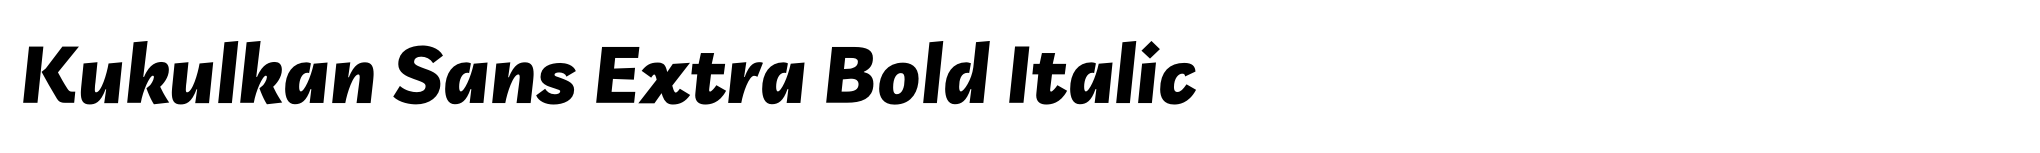 Kukulkan Sans Extra Bold Italic image